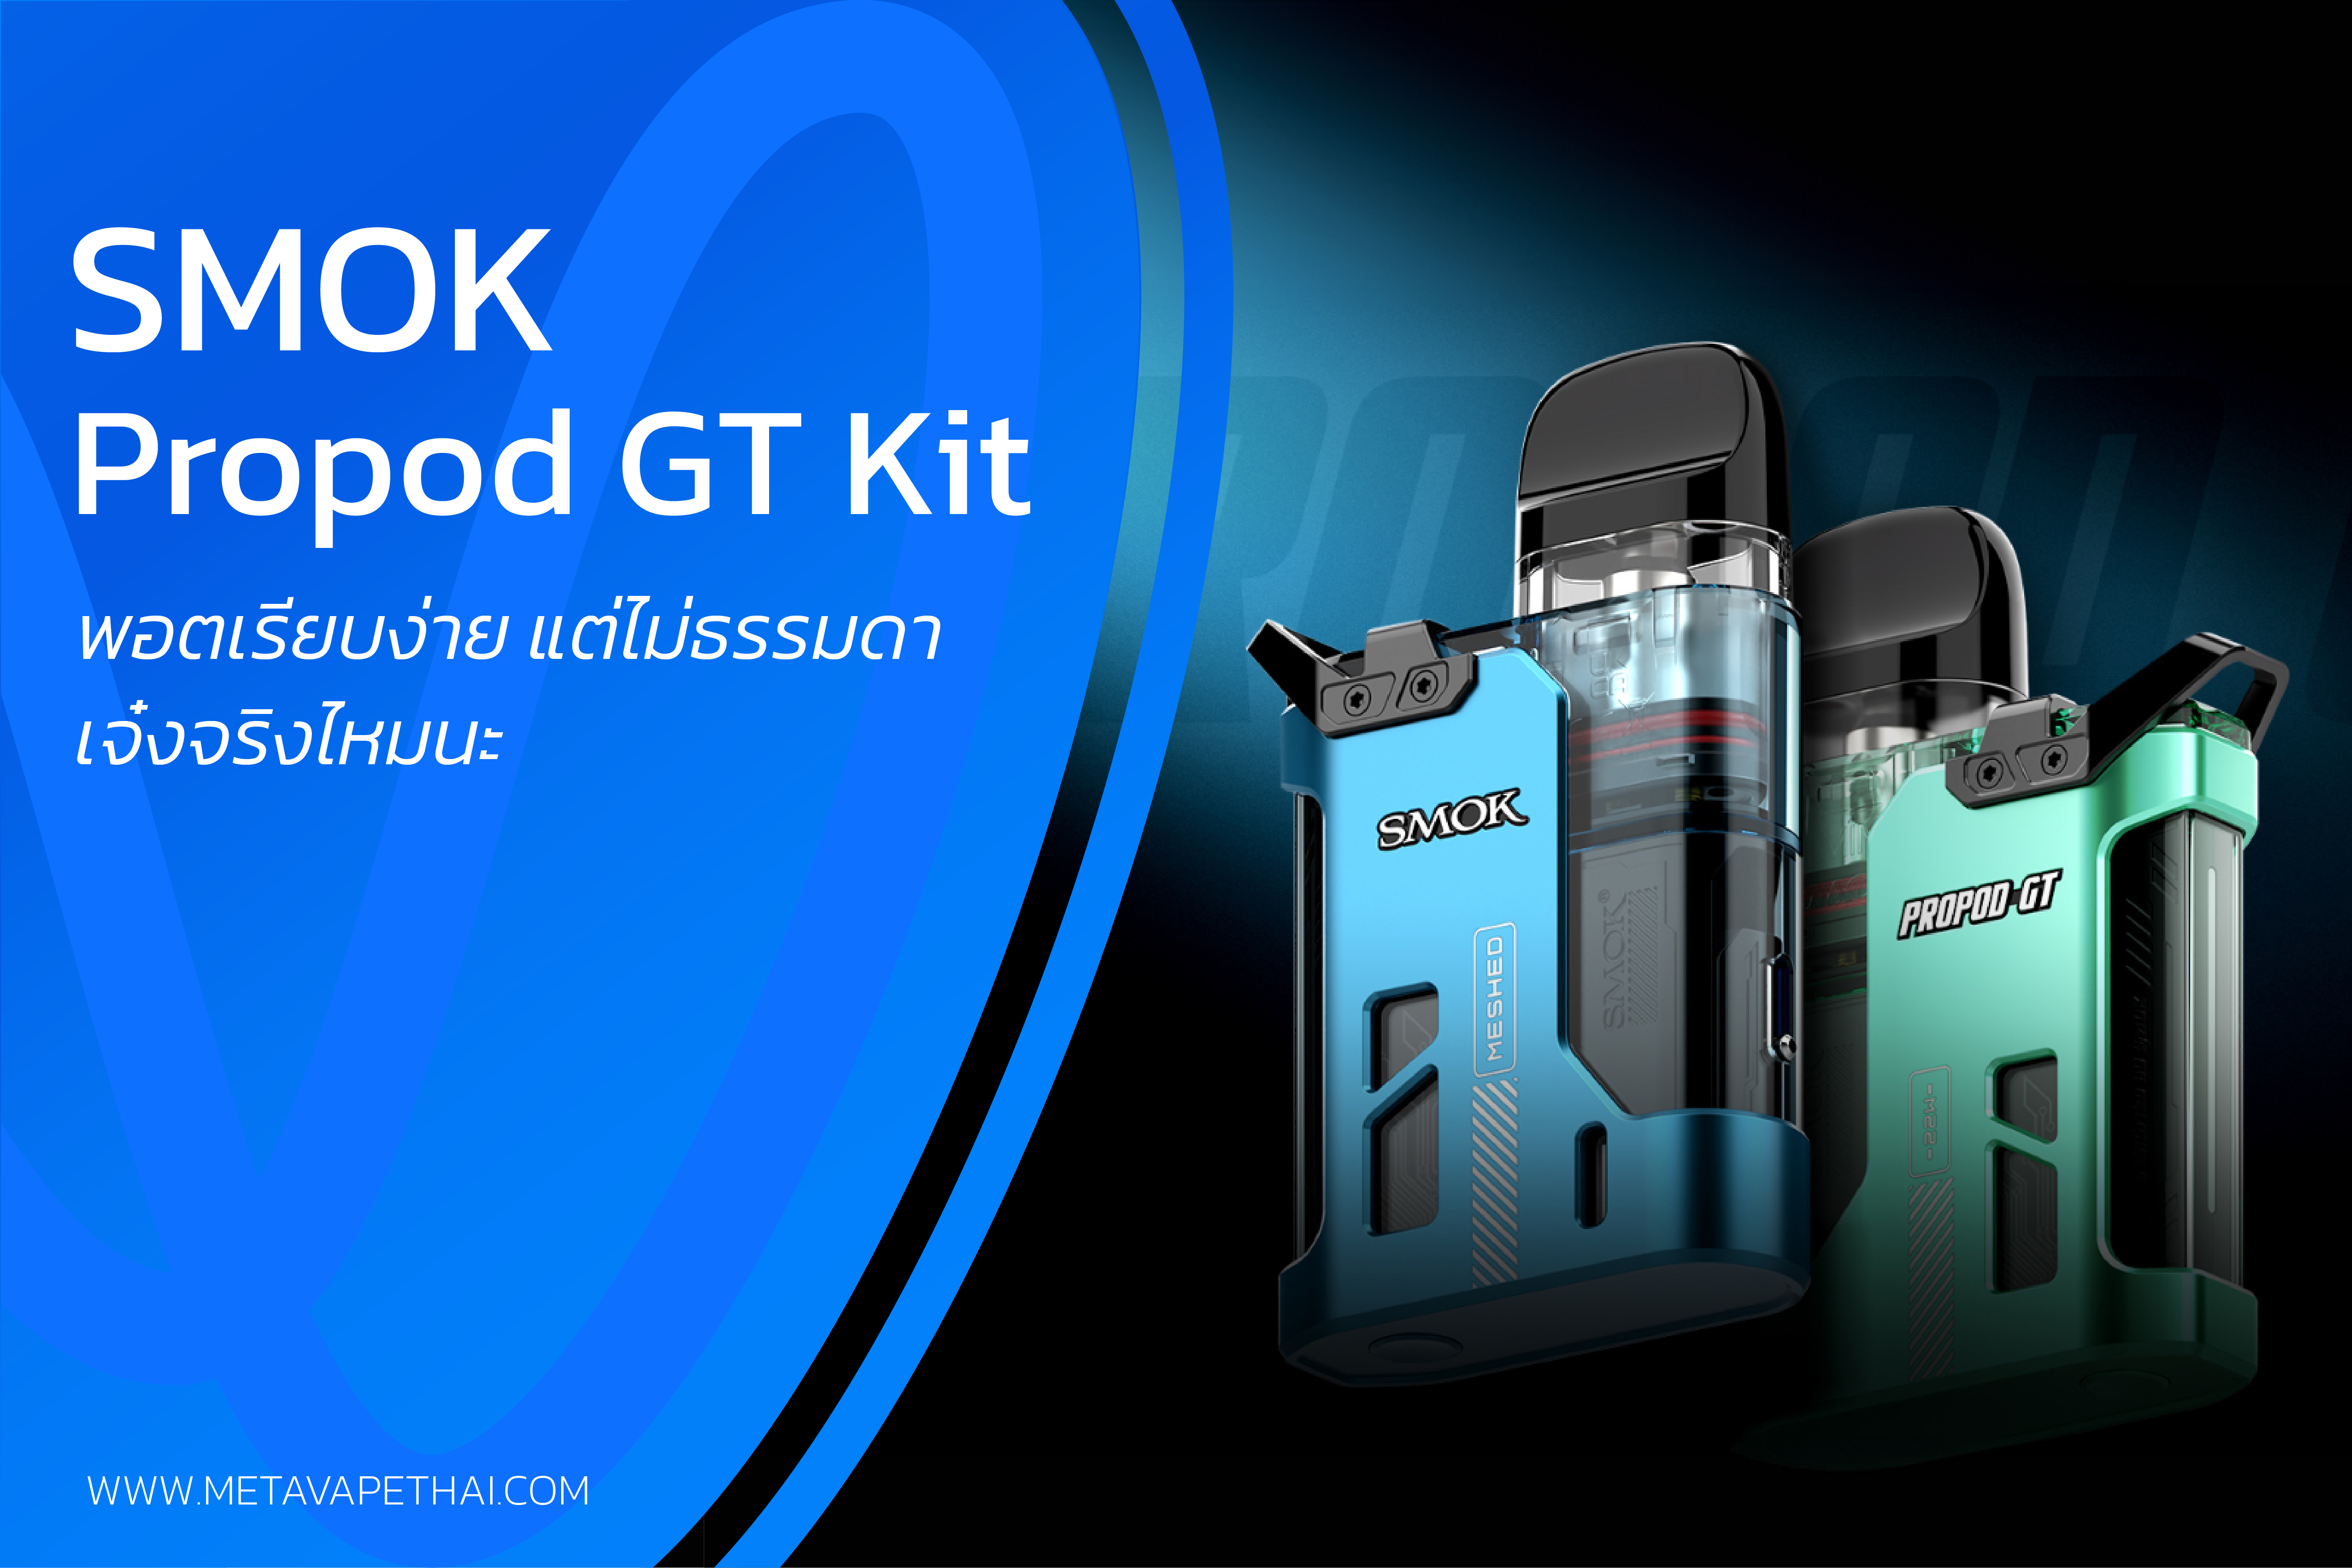 SMOK Propod GT Kit พอตเรียบง่าย แต่ไม่ธรรมดา เจ๋งจริงไหมนะ